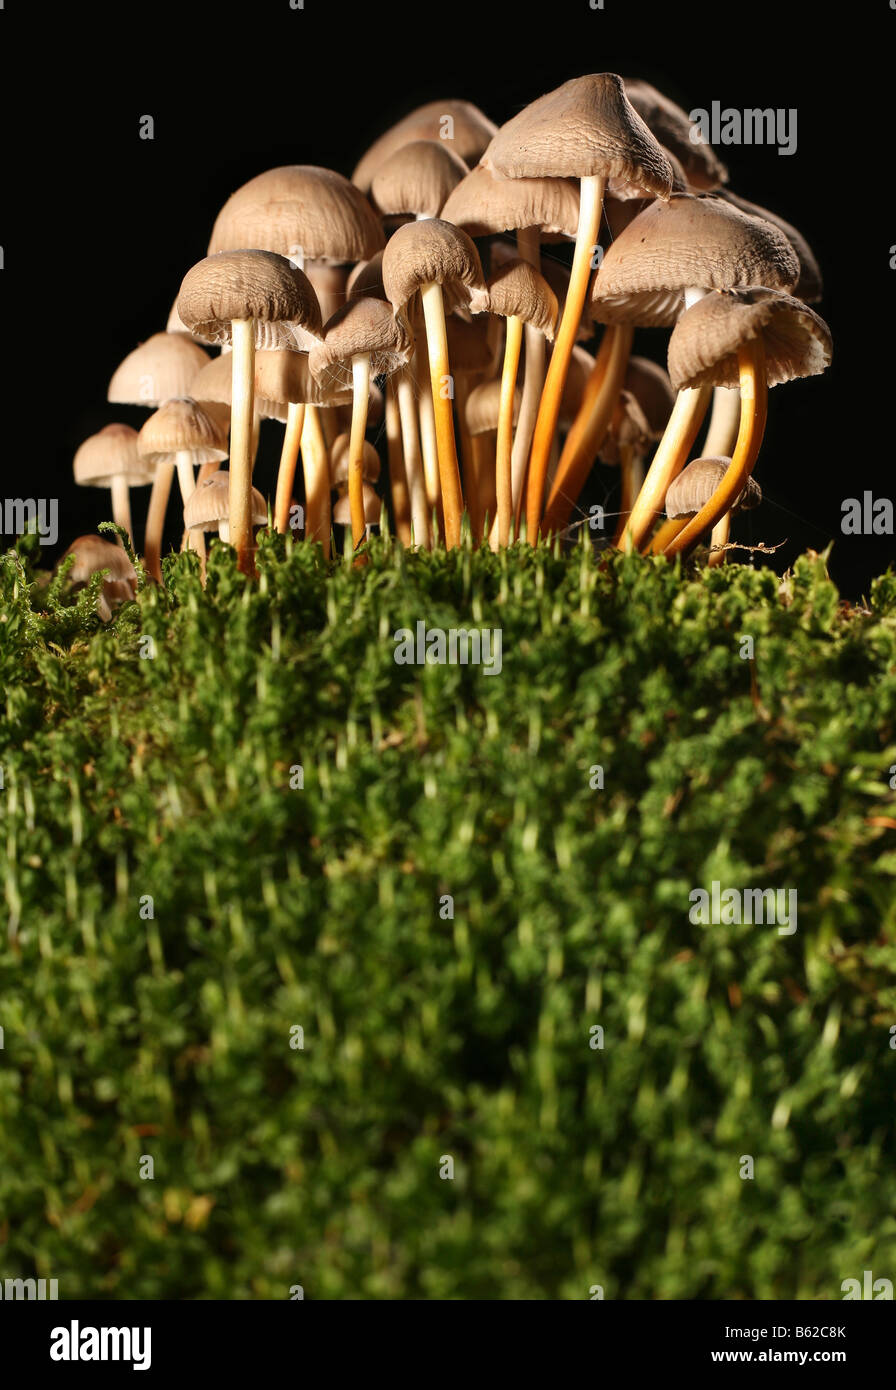 Pilz-Gruppe auf grünem Moos in schwarz Stockfoto